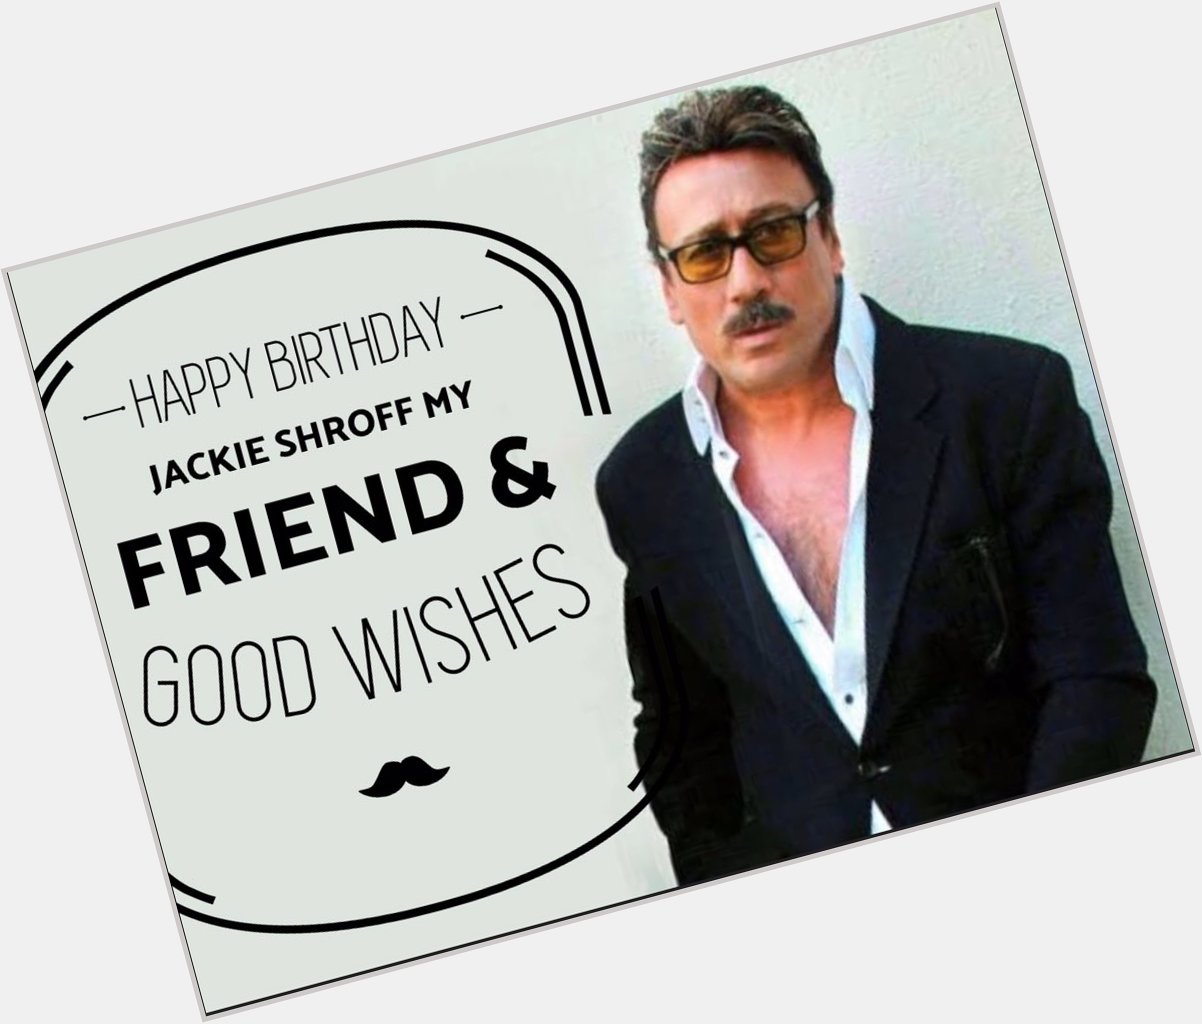 Happy Birthday my Friend Jackie Shroff & Good Wishes.* Deepak Pandit Bollywood Astrologer  